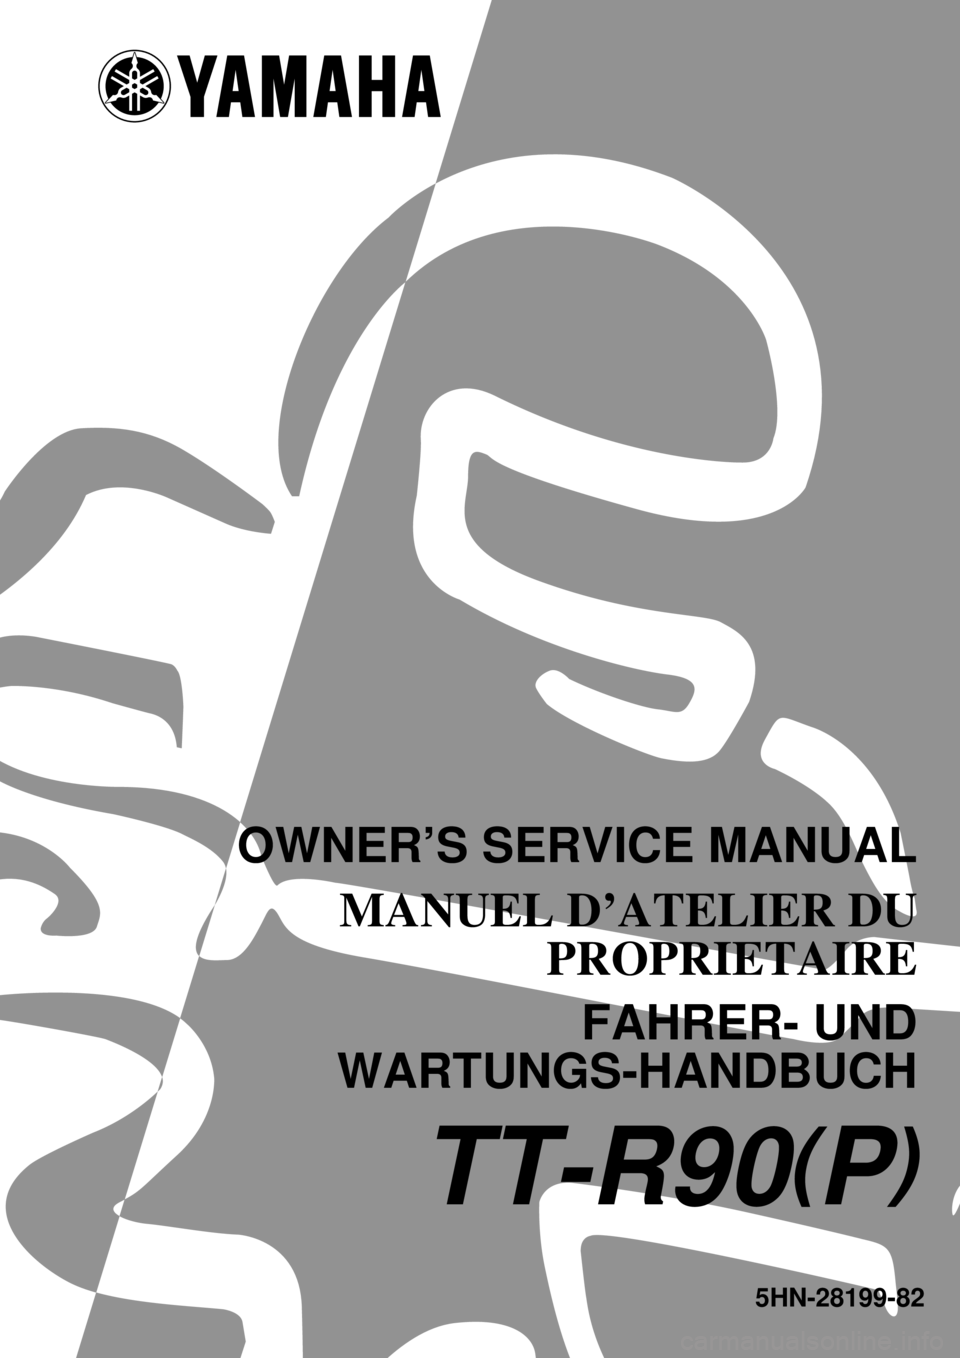 YAMAHA TTR90 2002  Owners Manual 5HN-28199-82
TT-R90(P)
OWNER’S SERVICE MANUAL
MANUEL D’ATELIER DU
PROPRIETAIRE
FAHRER- UND
WARTUNGS-HANDBUCH 